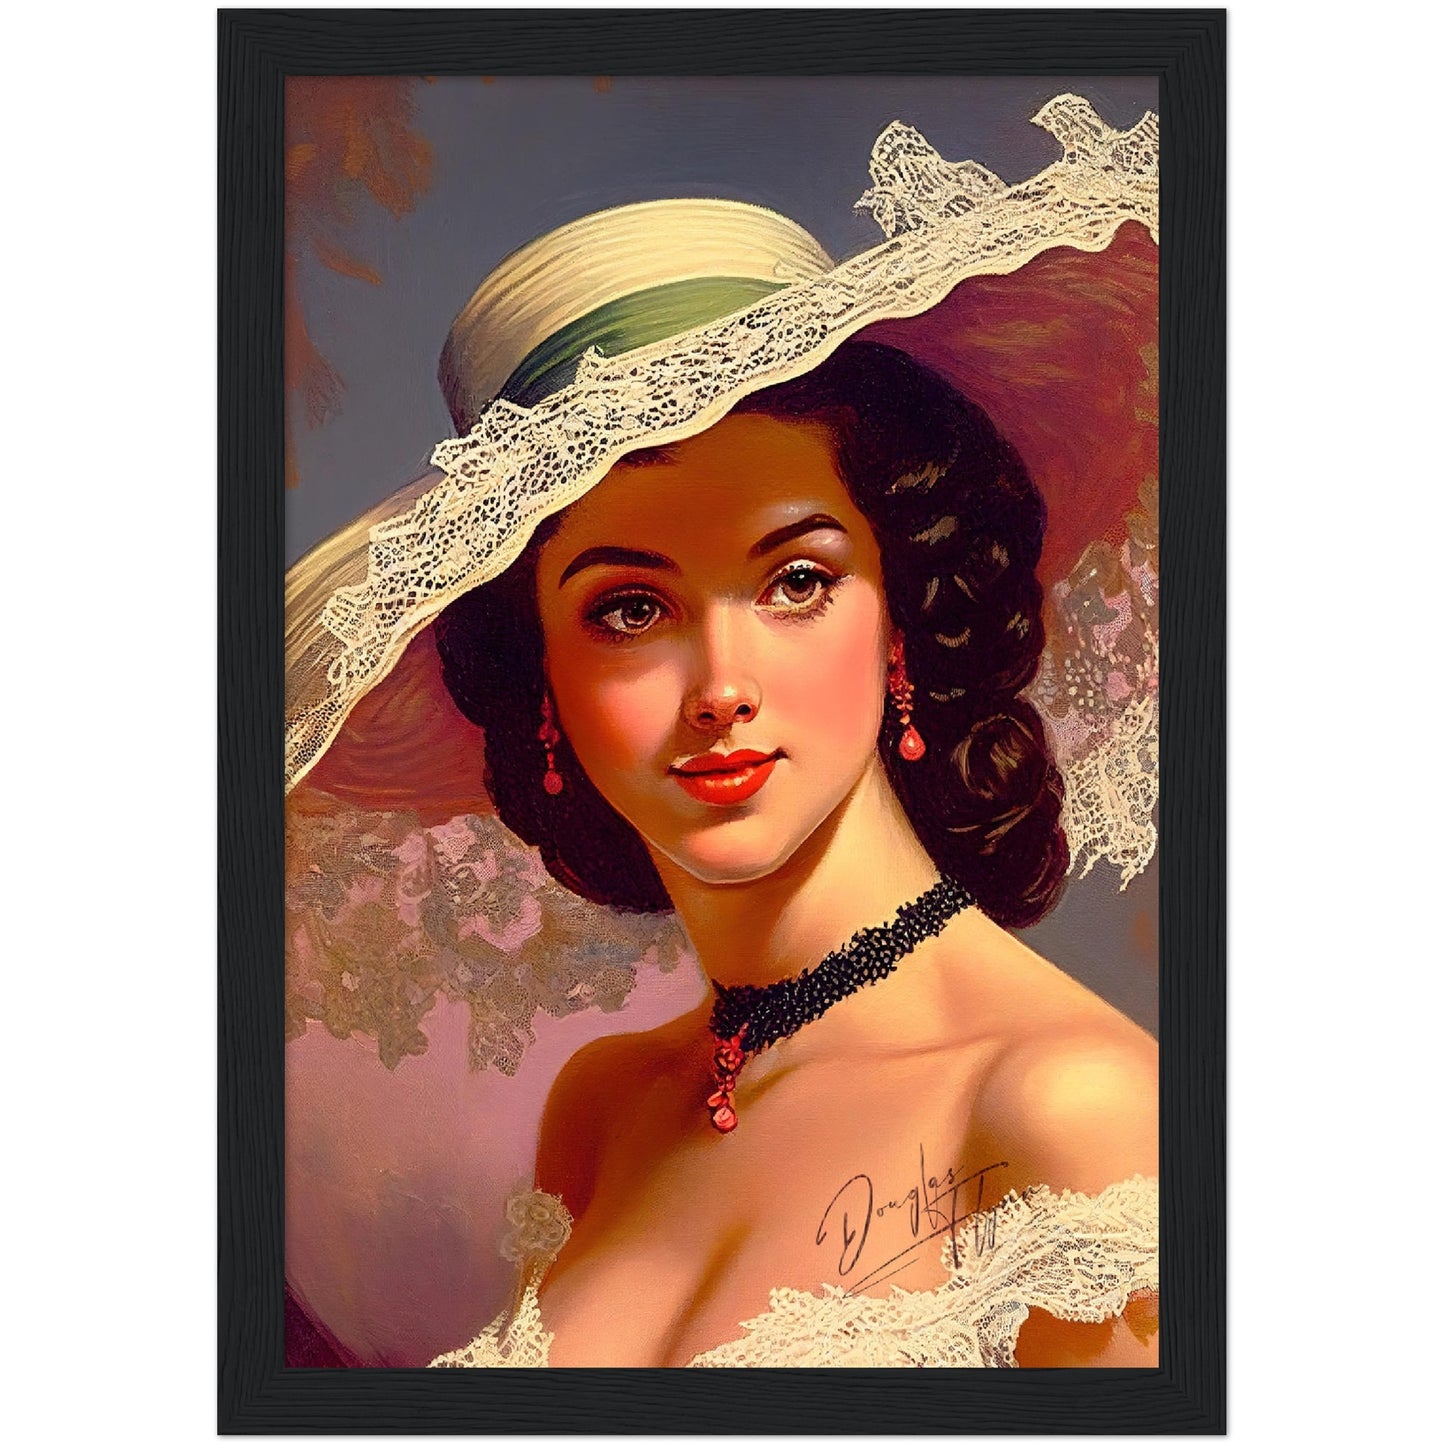 »Vintage Vanessa« retro poster